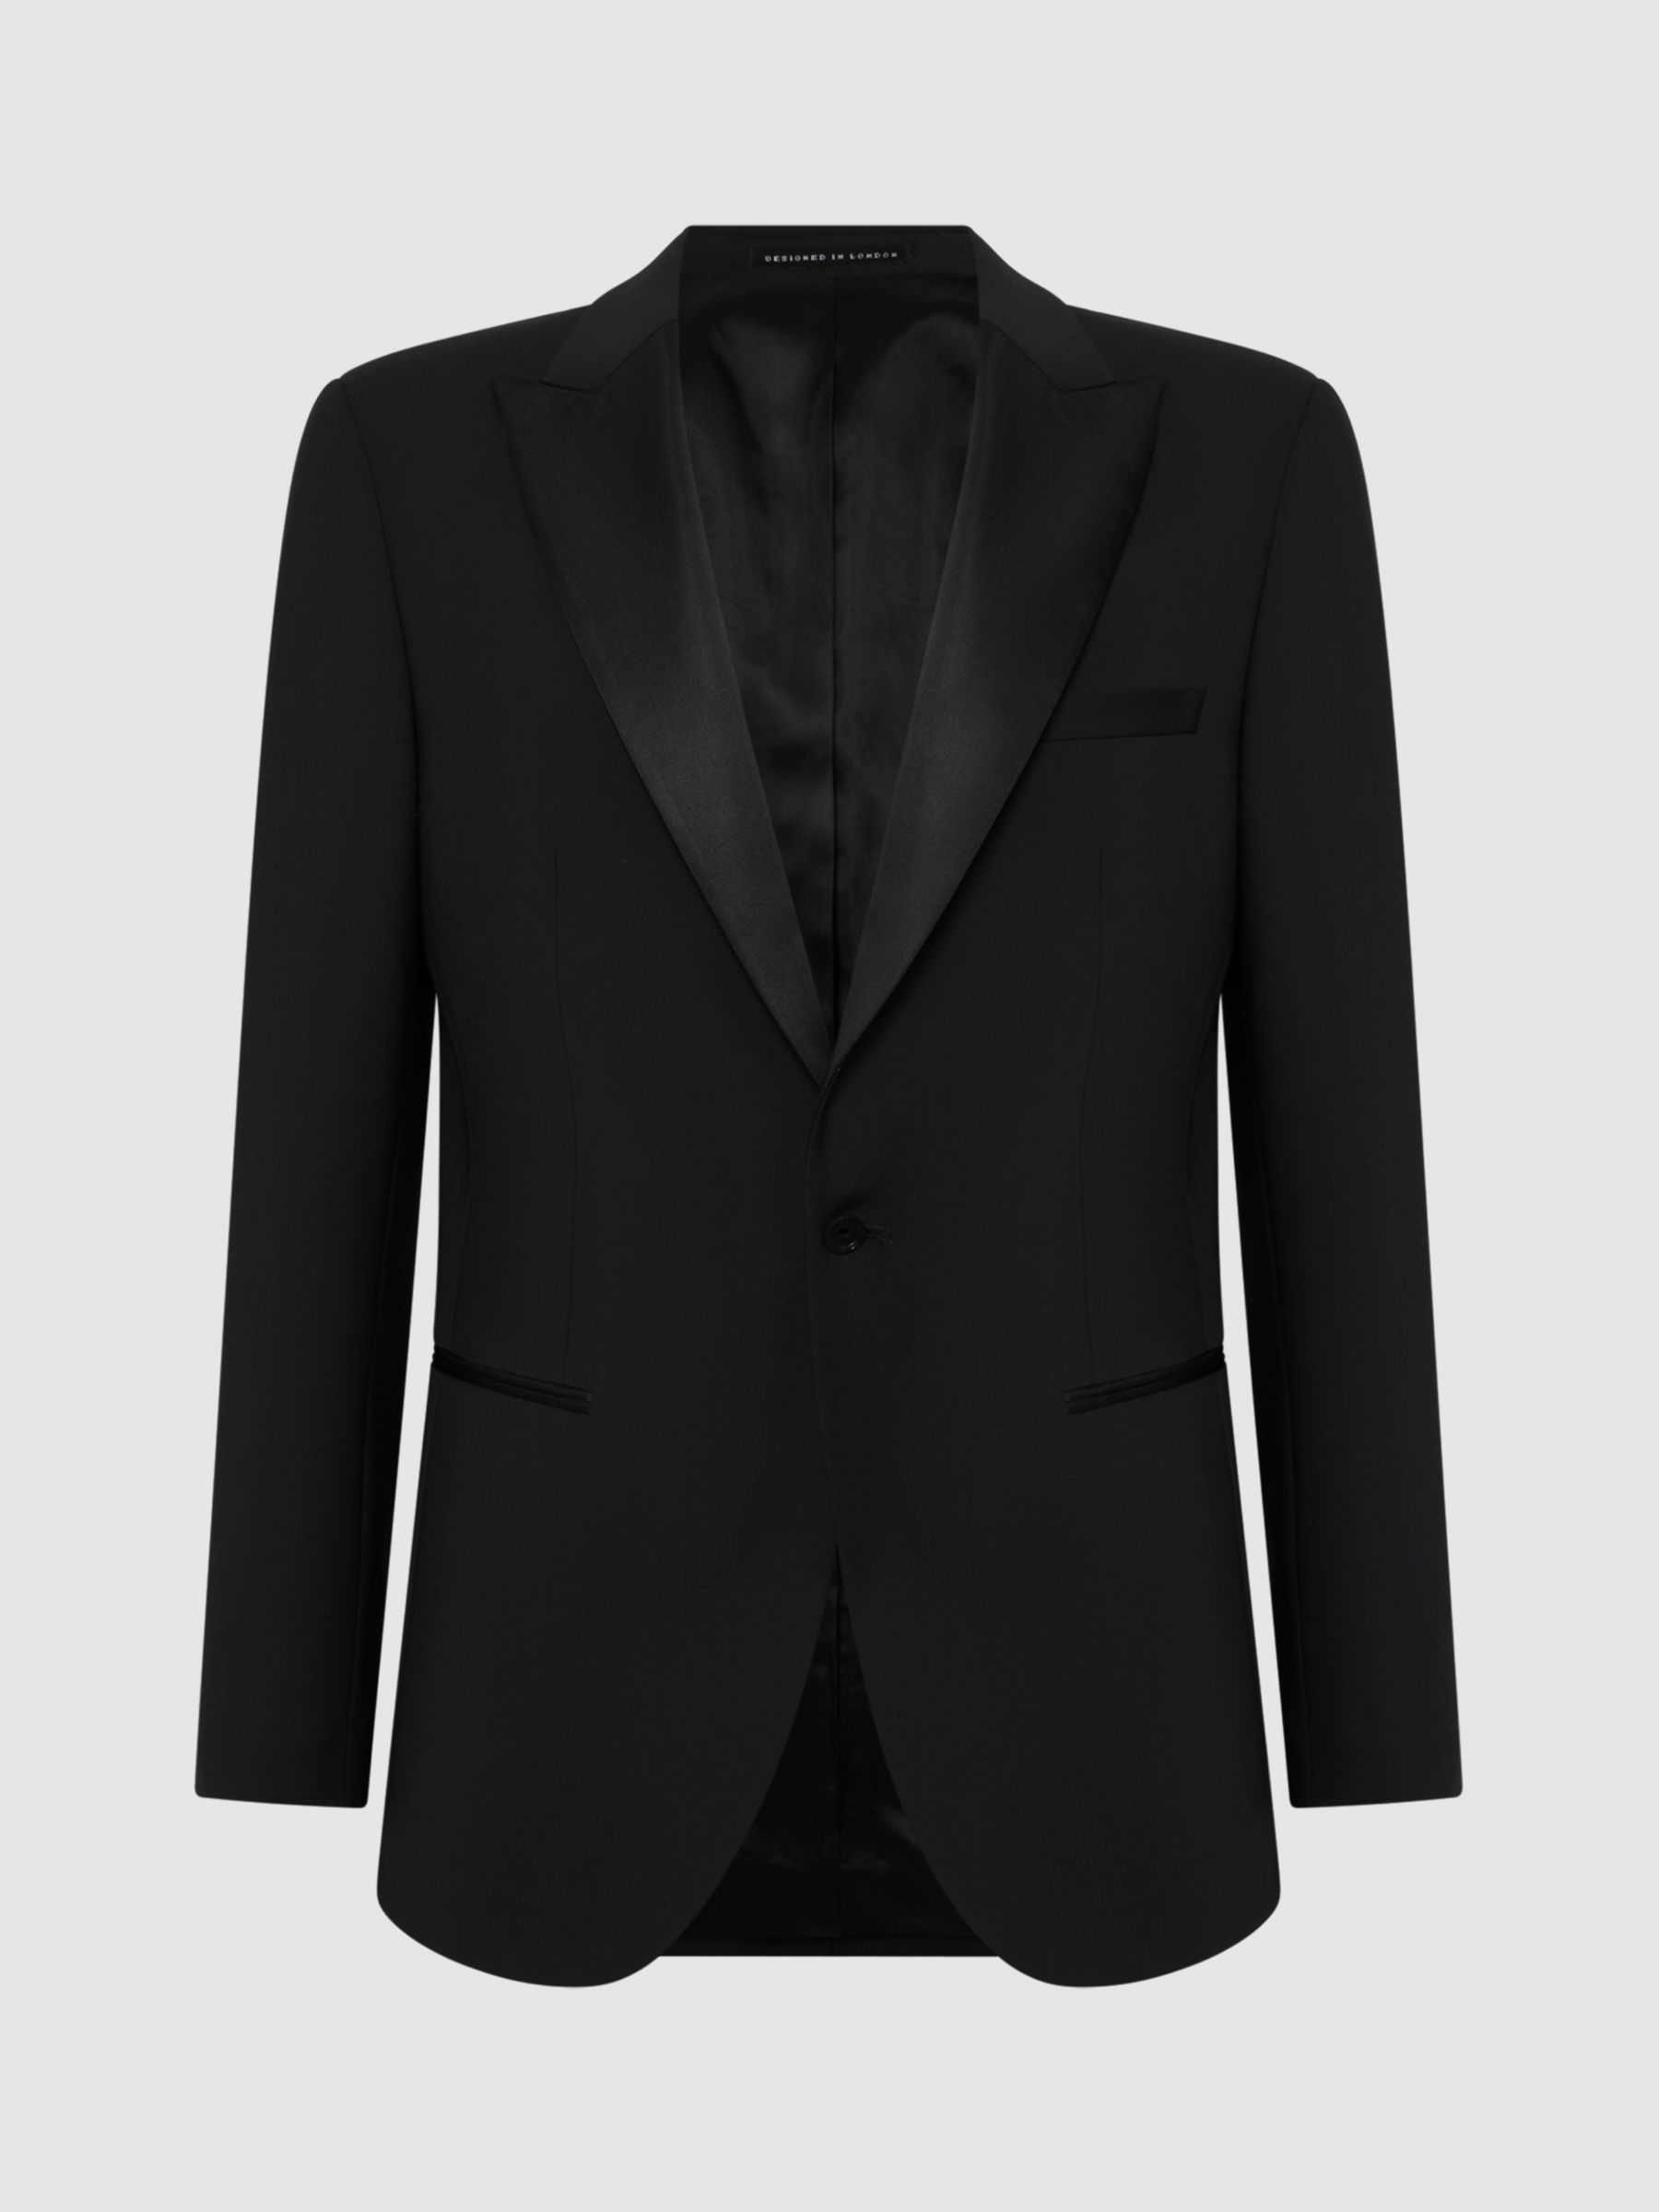 Buy Reiss Poker Suit Jacket Online at johnlewis.com